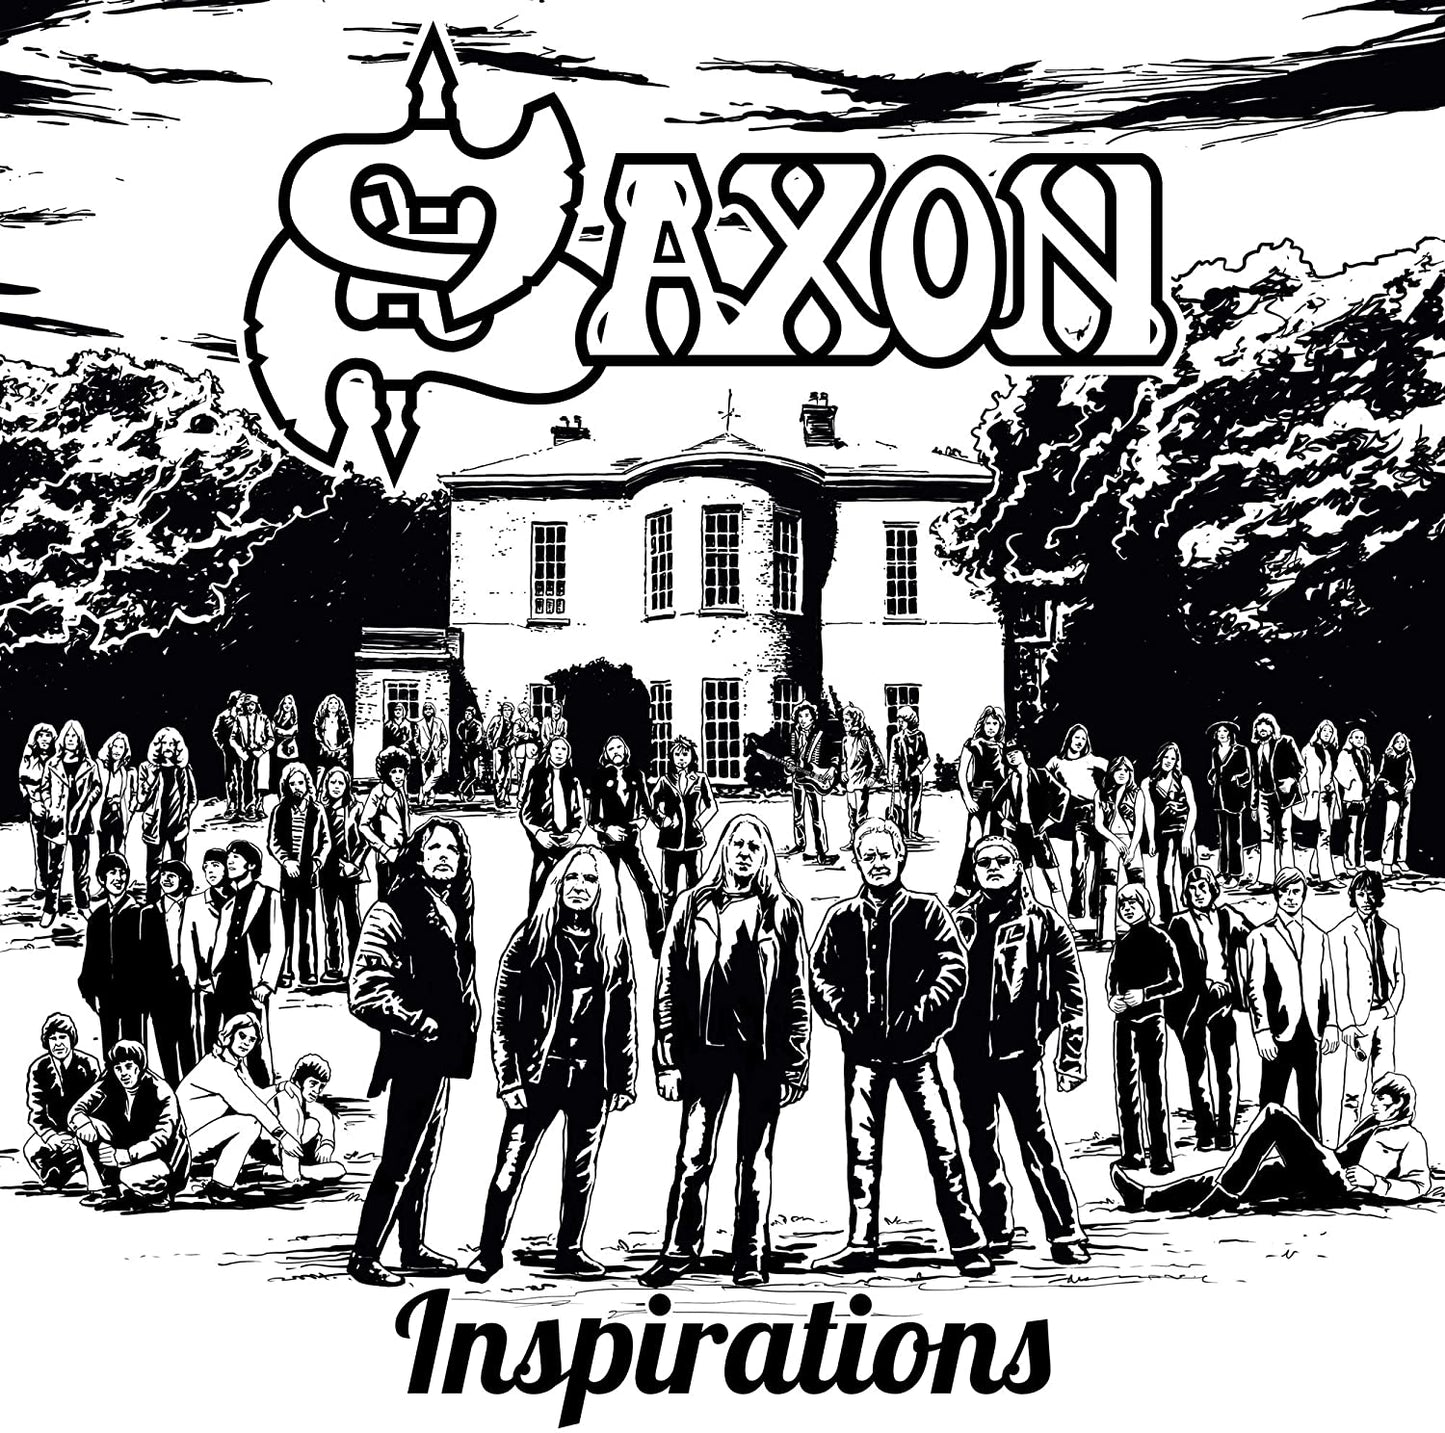 CD - Saxon - Inspirations